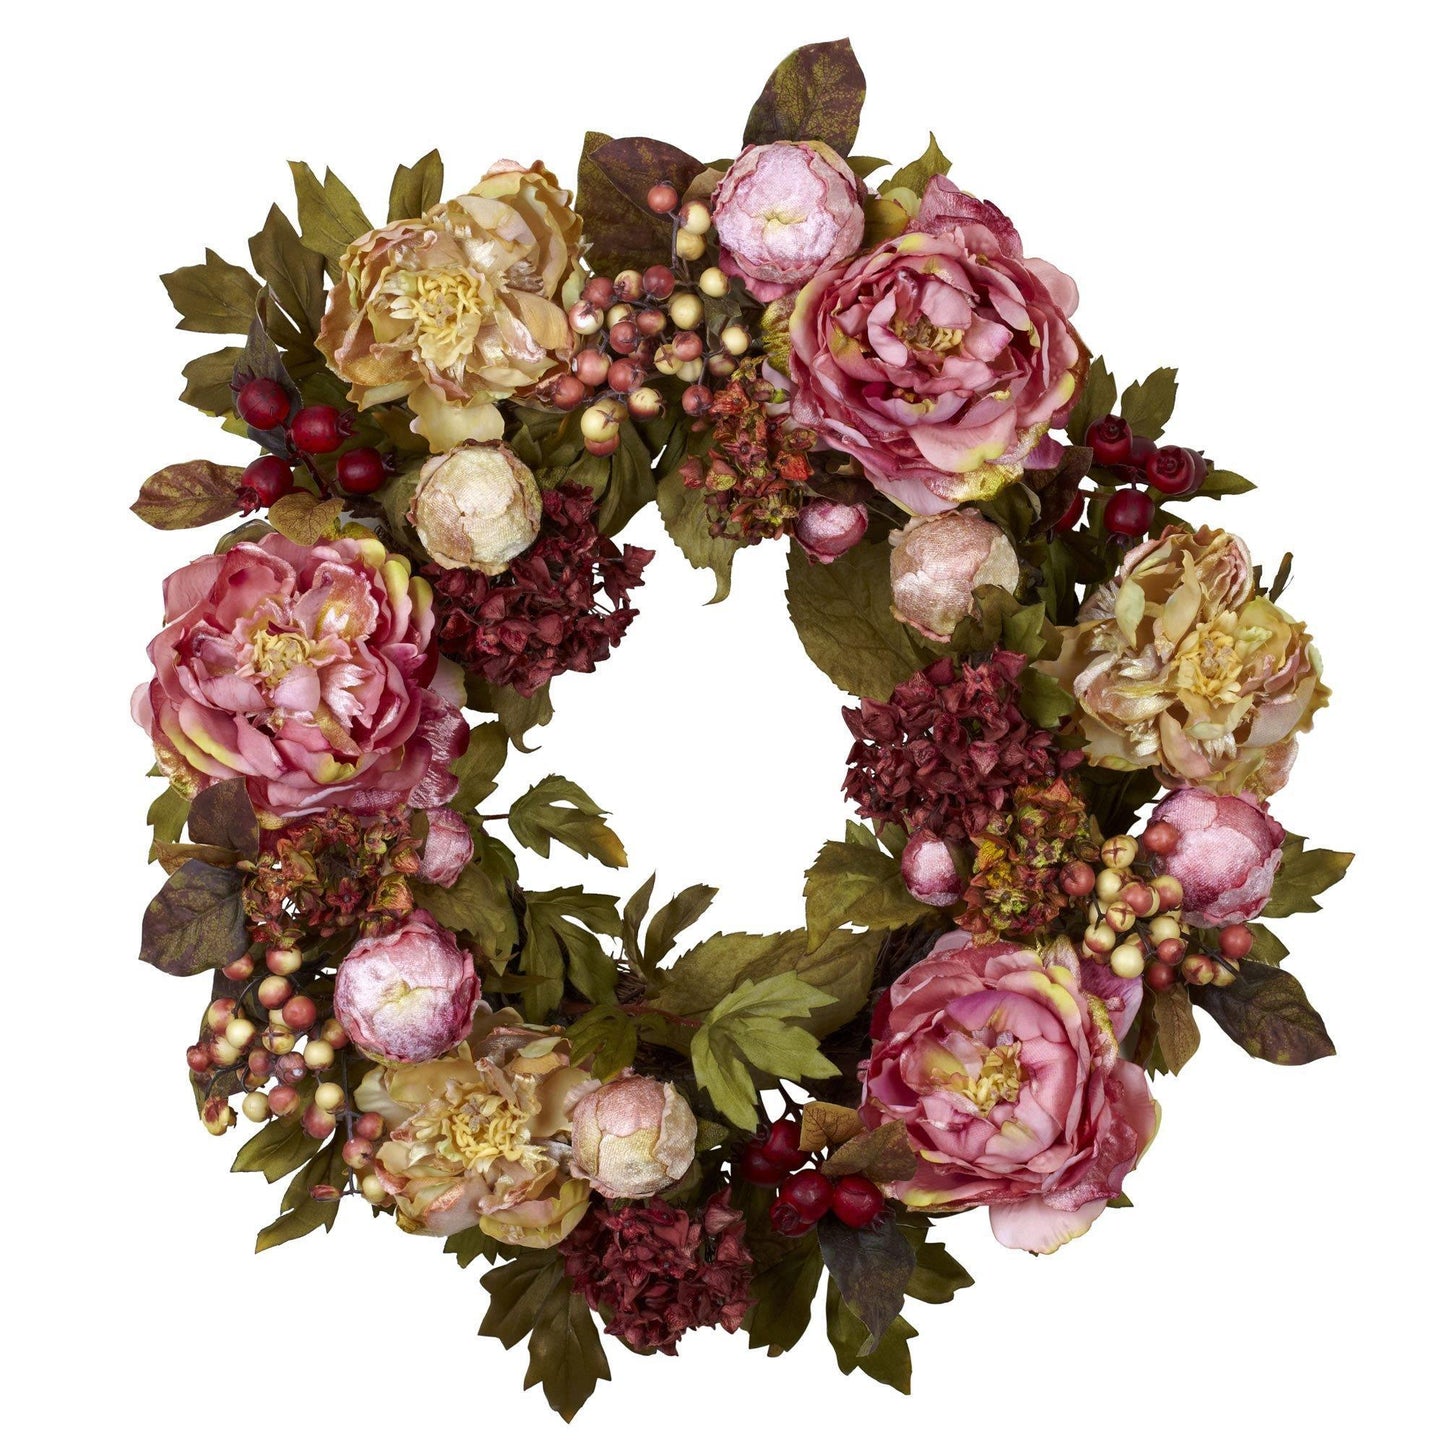 24" Peony Hydrangea Wreath" by Nearly Natural